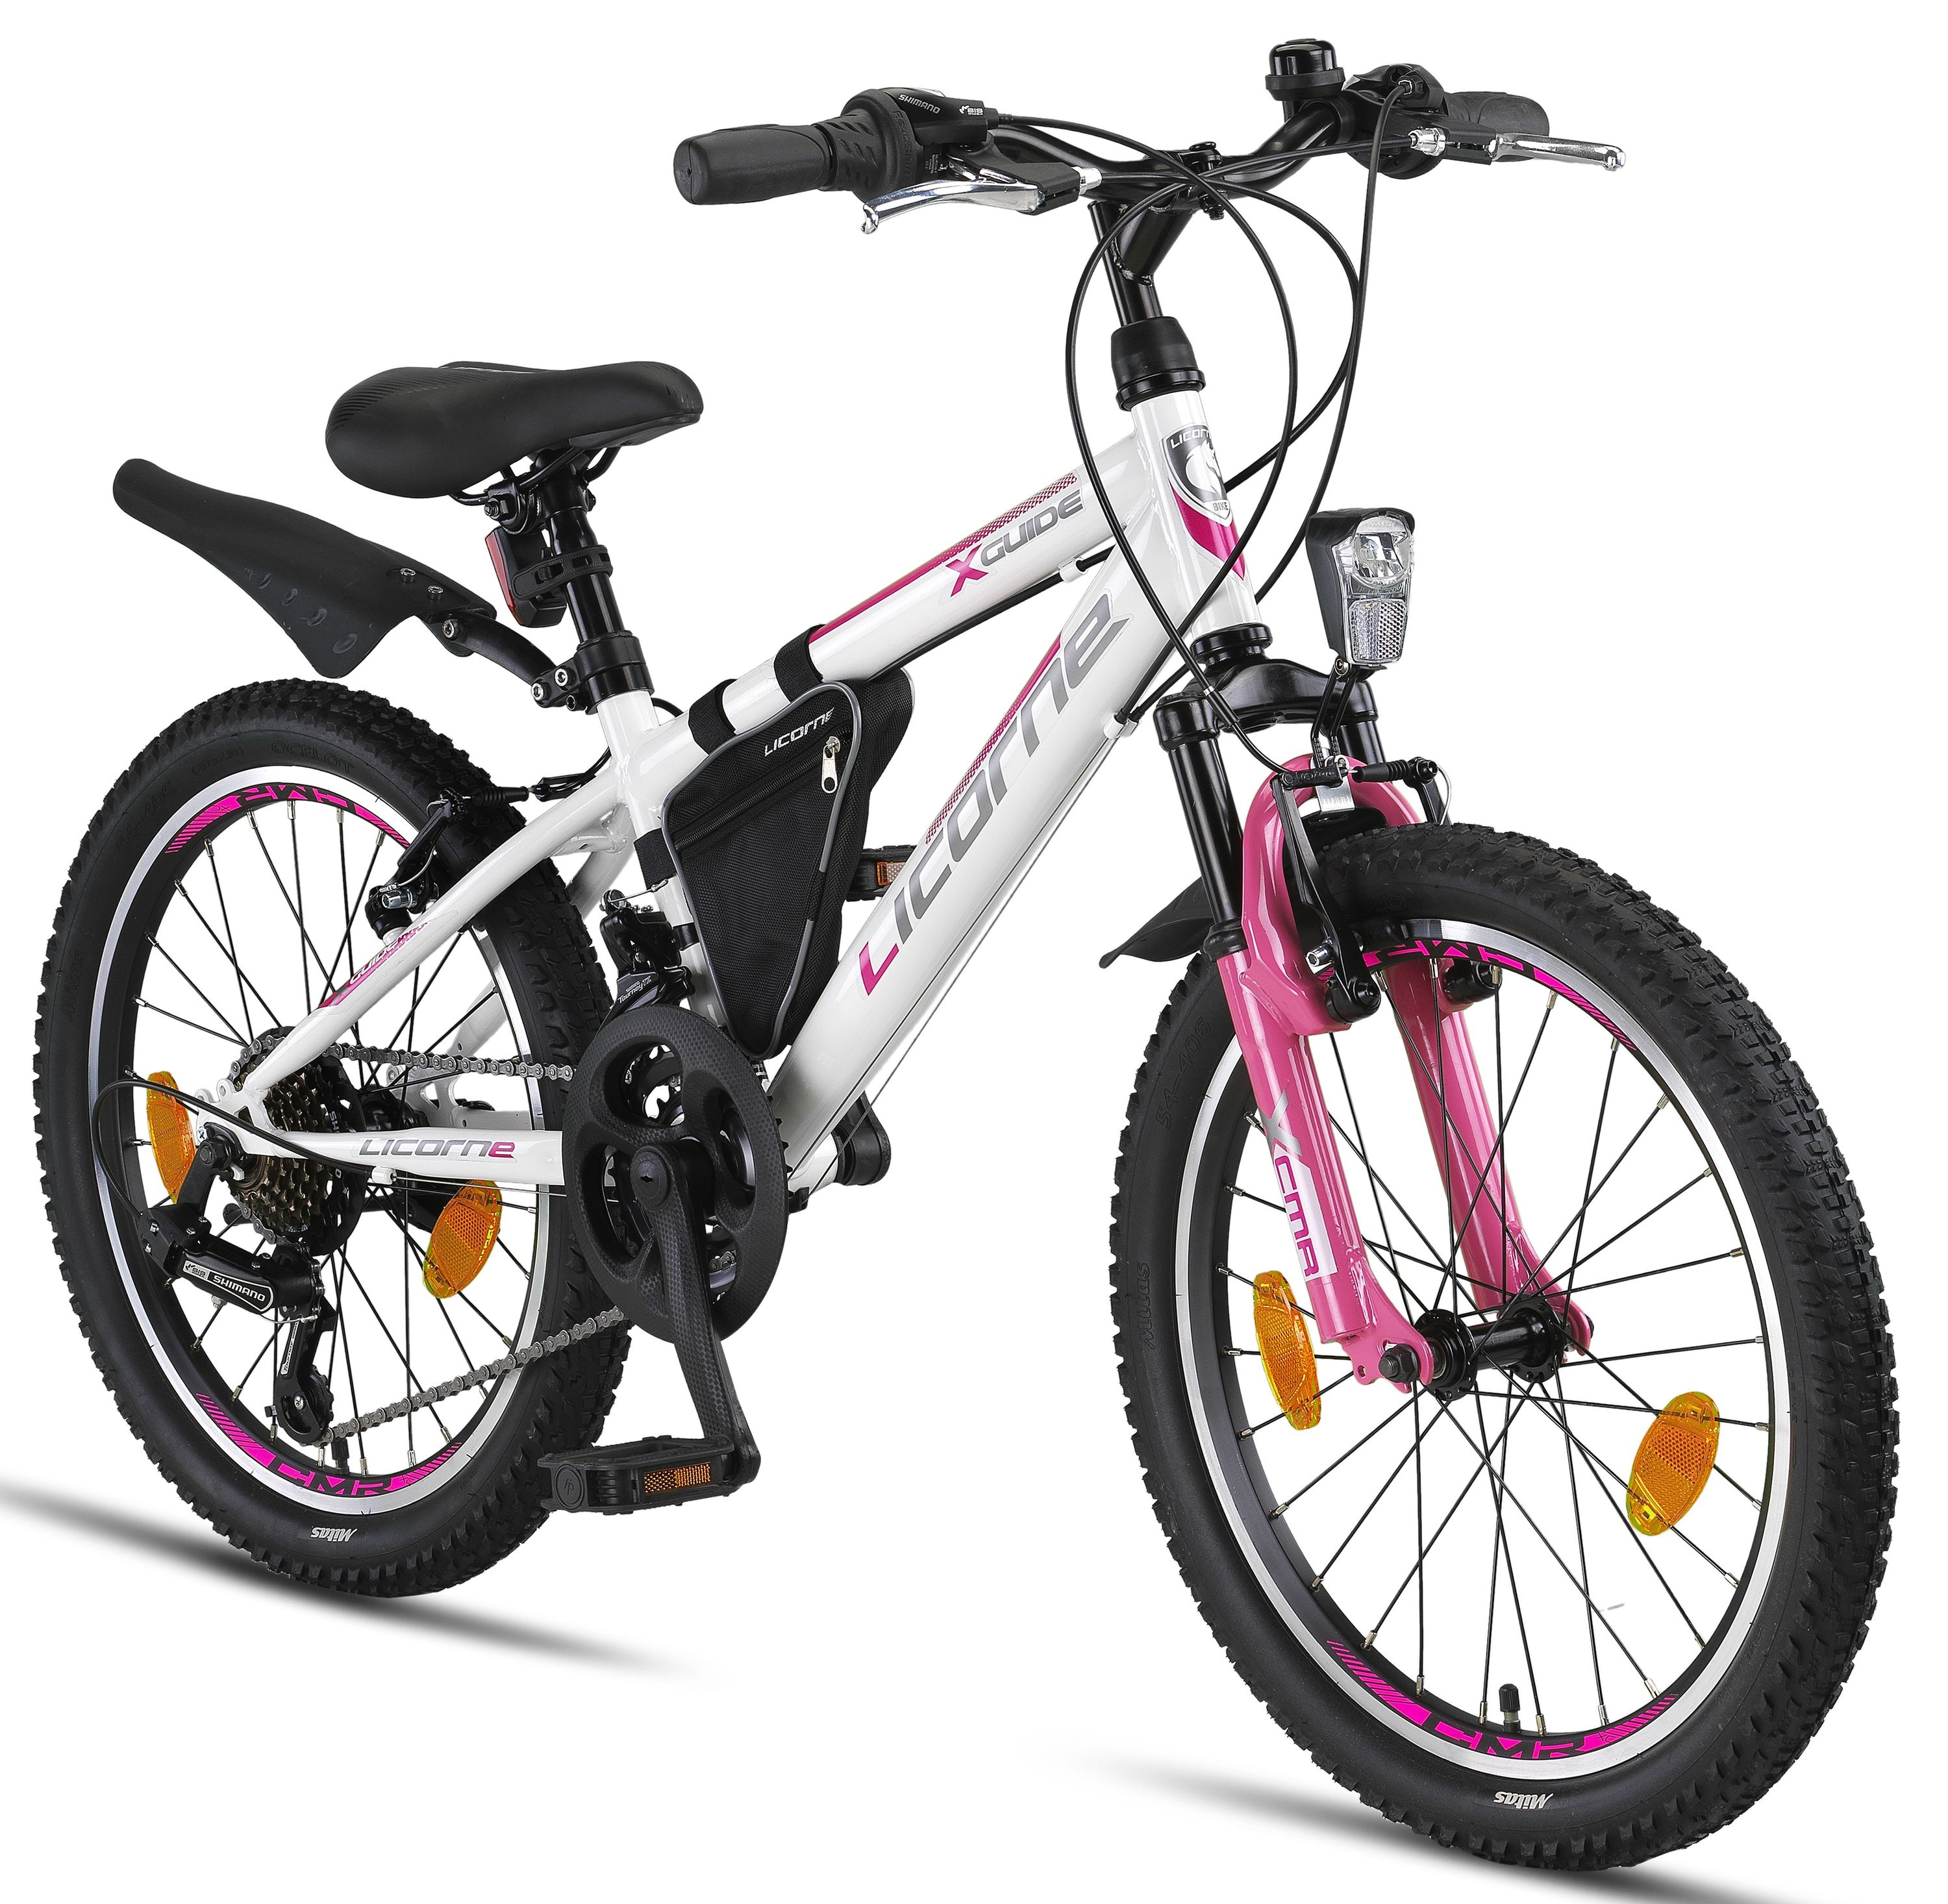 Licorne Bike Guide Premium mountain bike in 20, 24 and 26 inch - bike for girls, boys, men and women - Shimano 21 speed gears, children's bike, kids